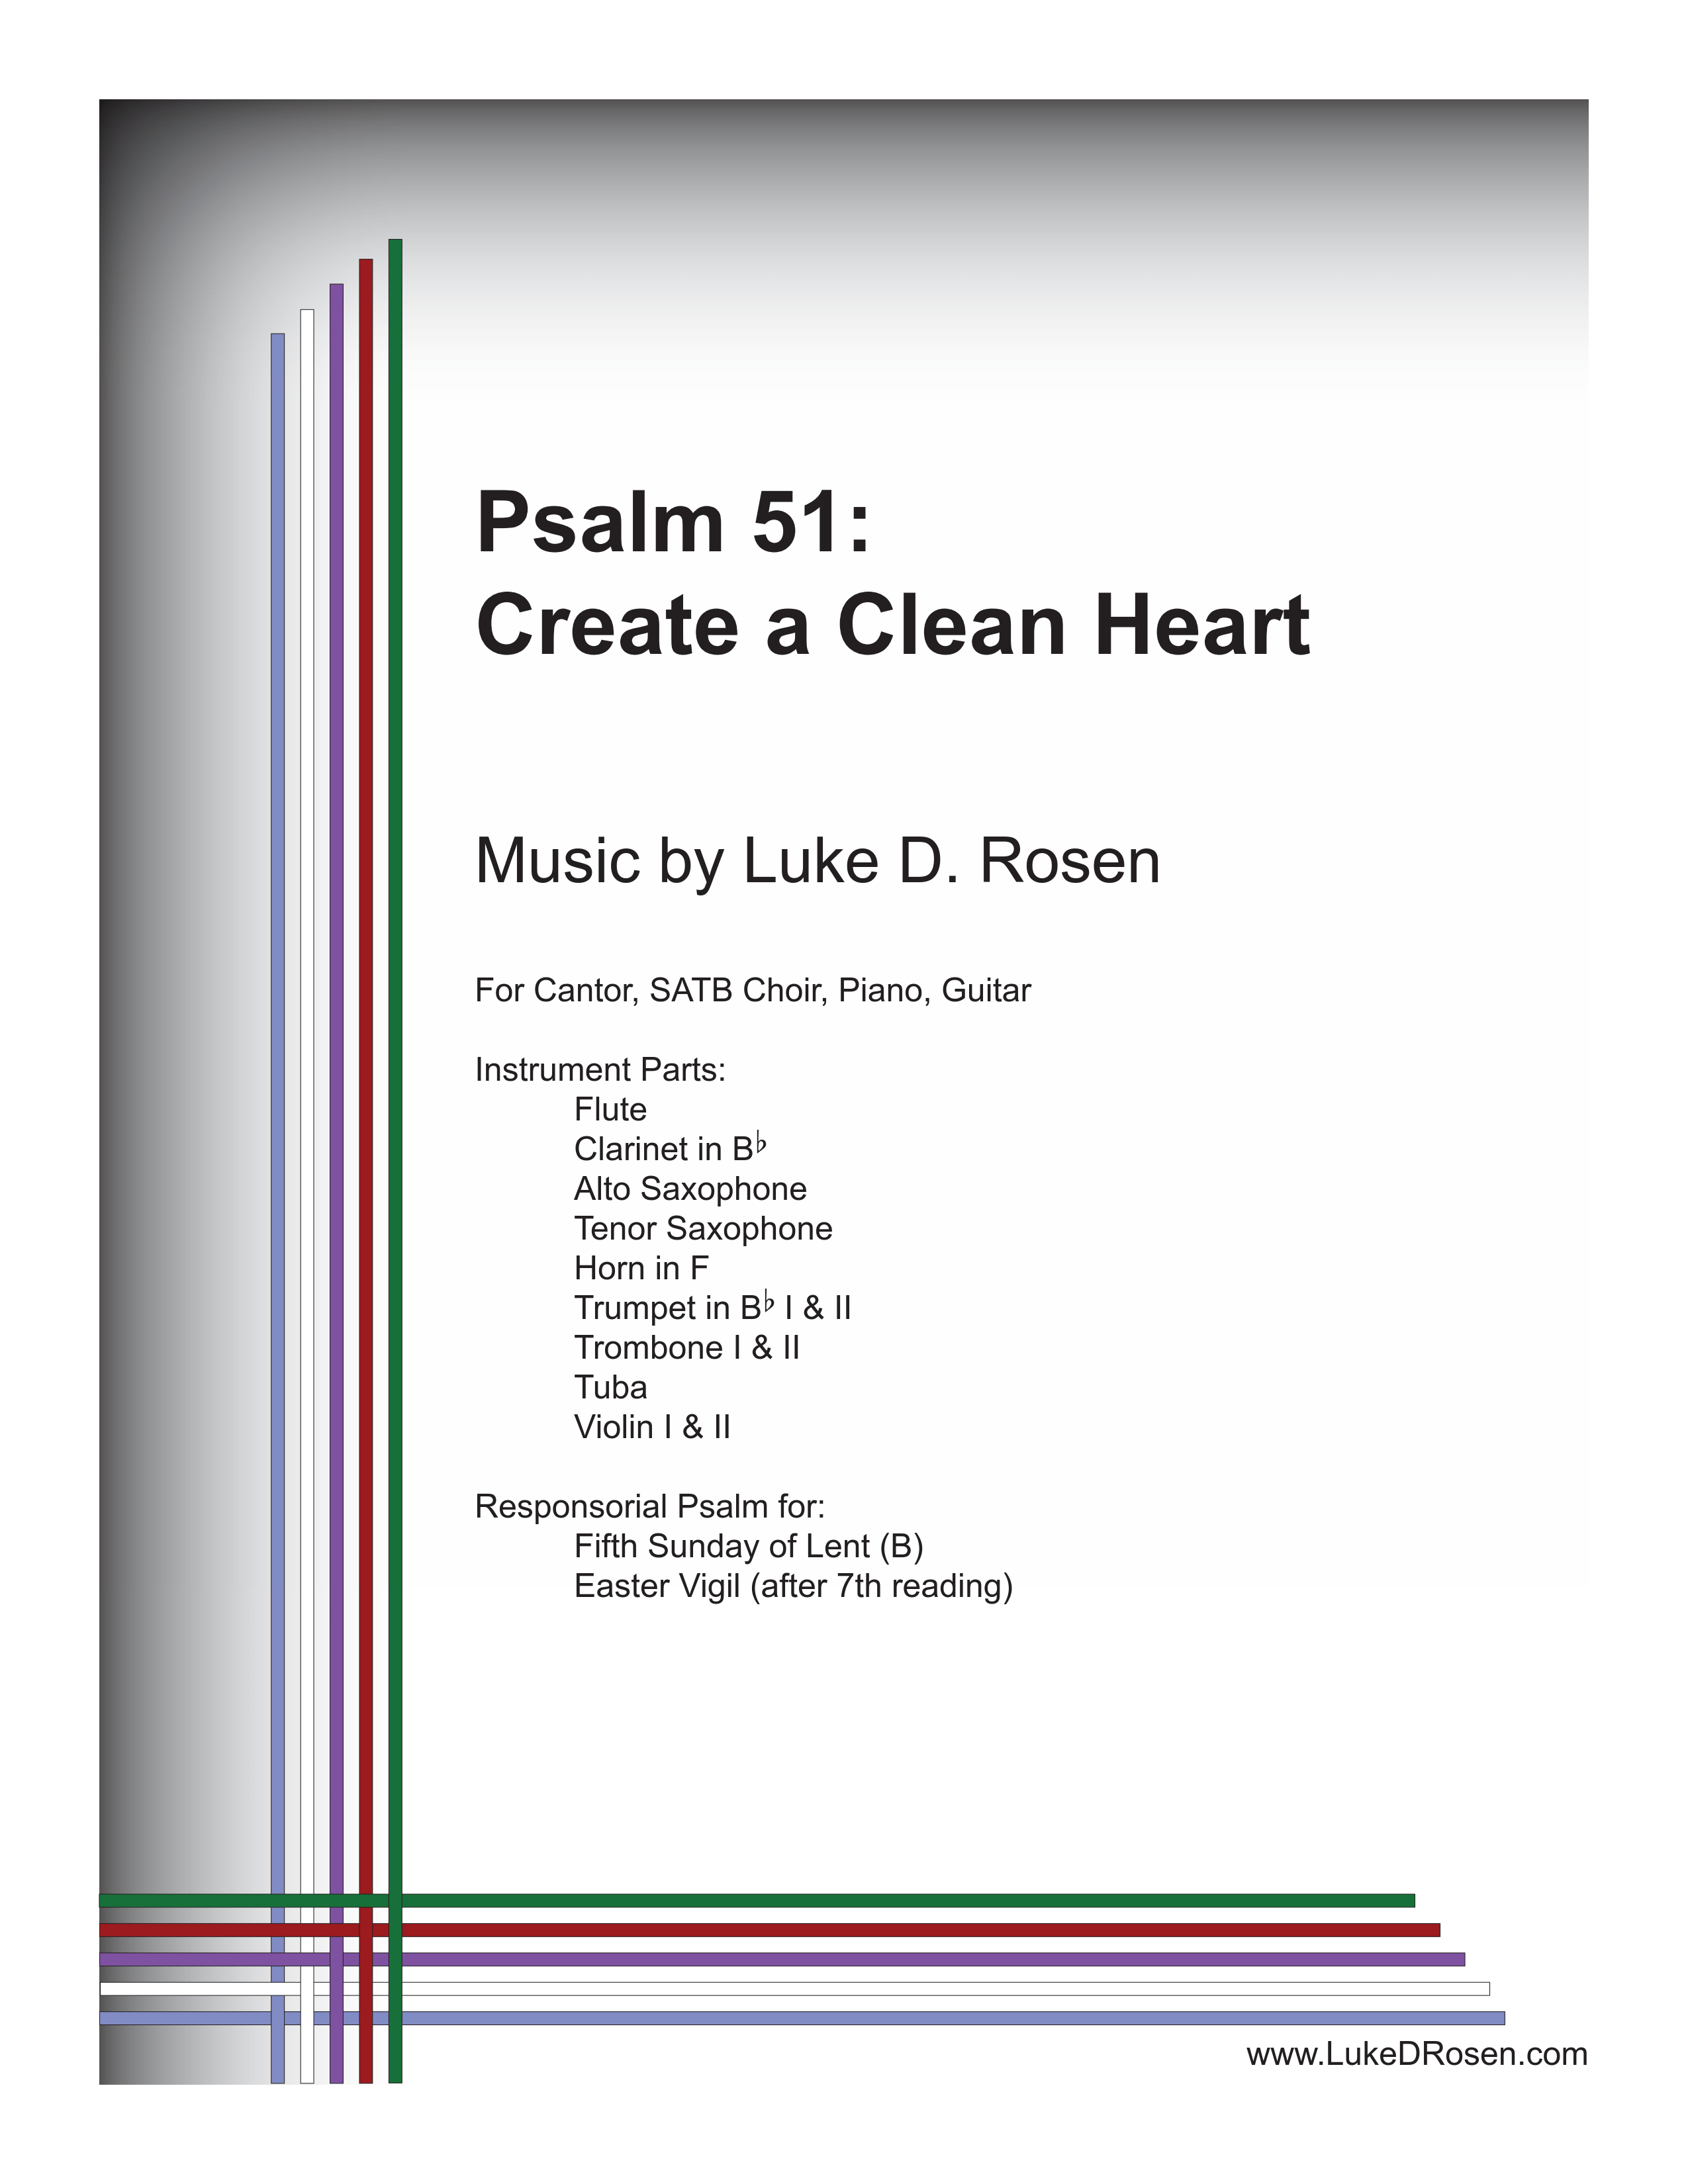 Psalm 51 – Create a Clean Heart (Rosen)